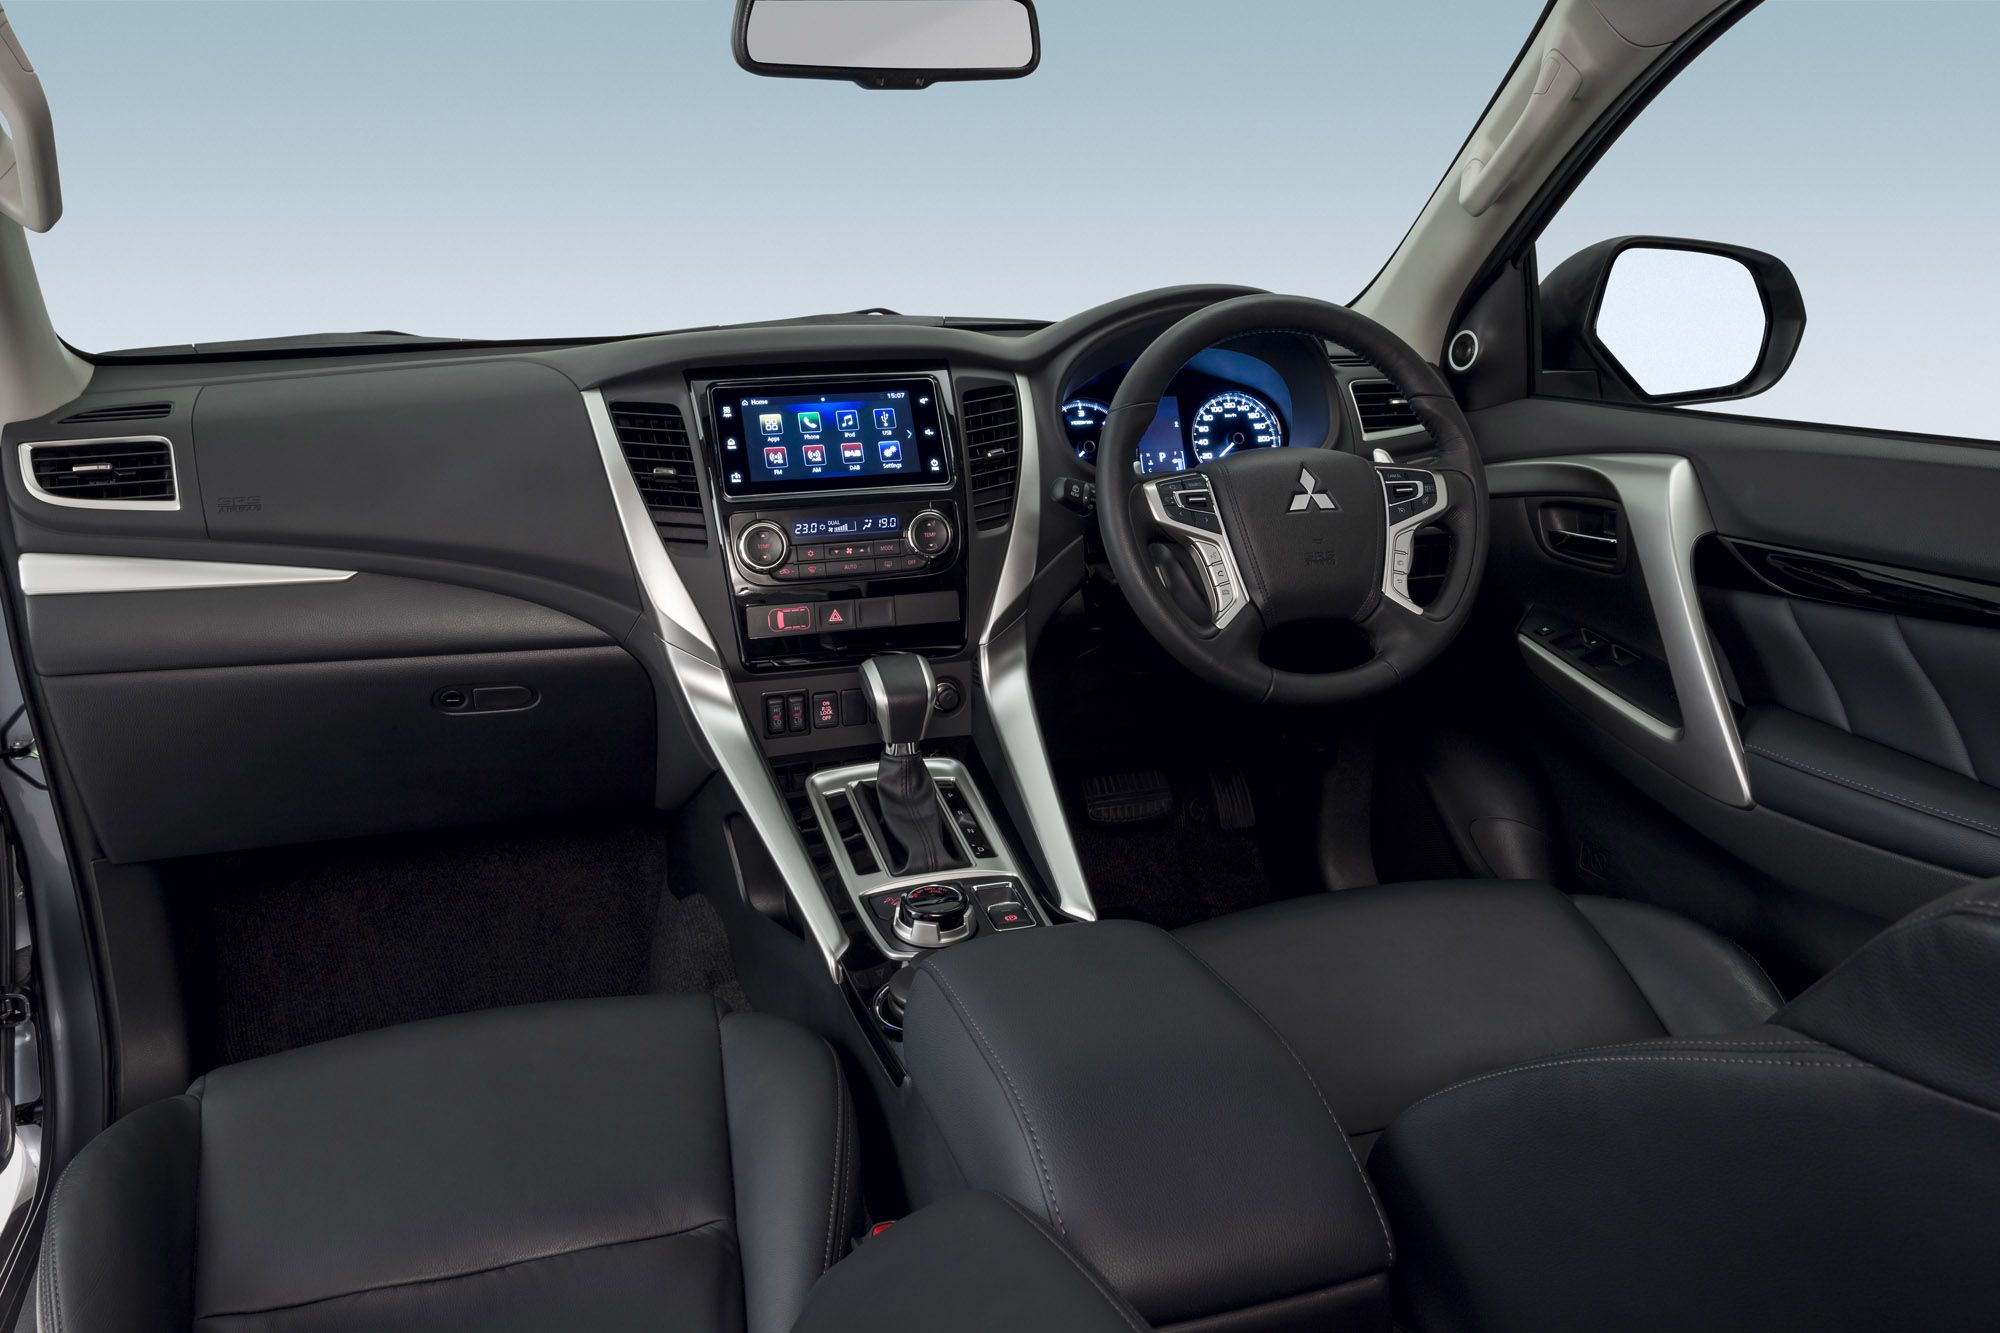 2016 Mitsubishi Pajero Sport Dashboard Interior (View 17 of 23)